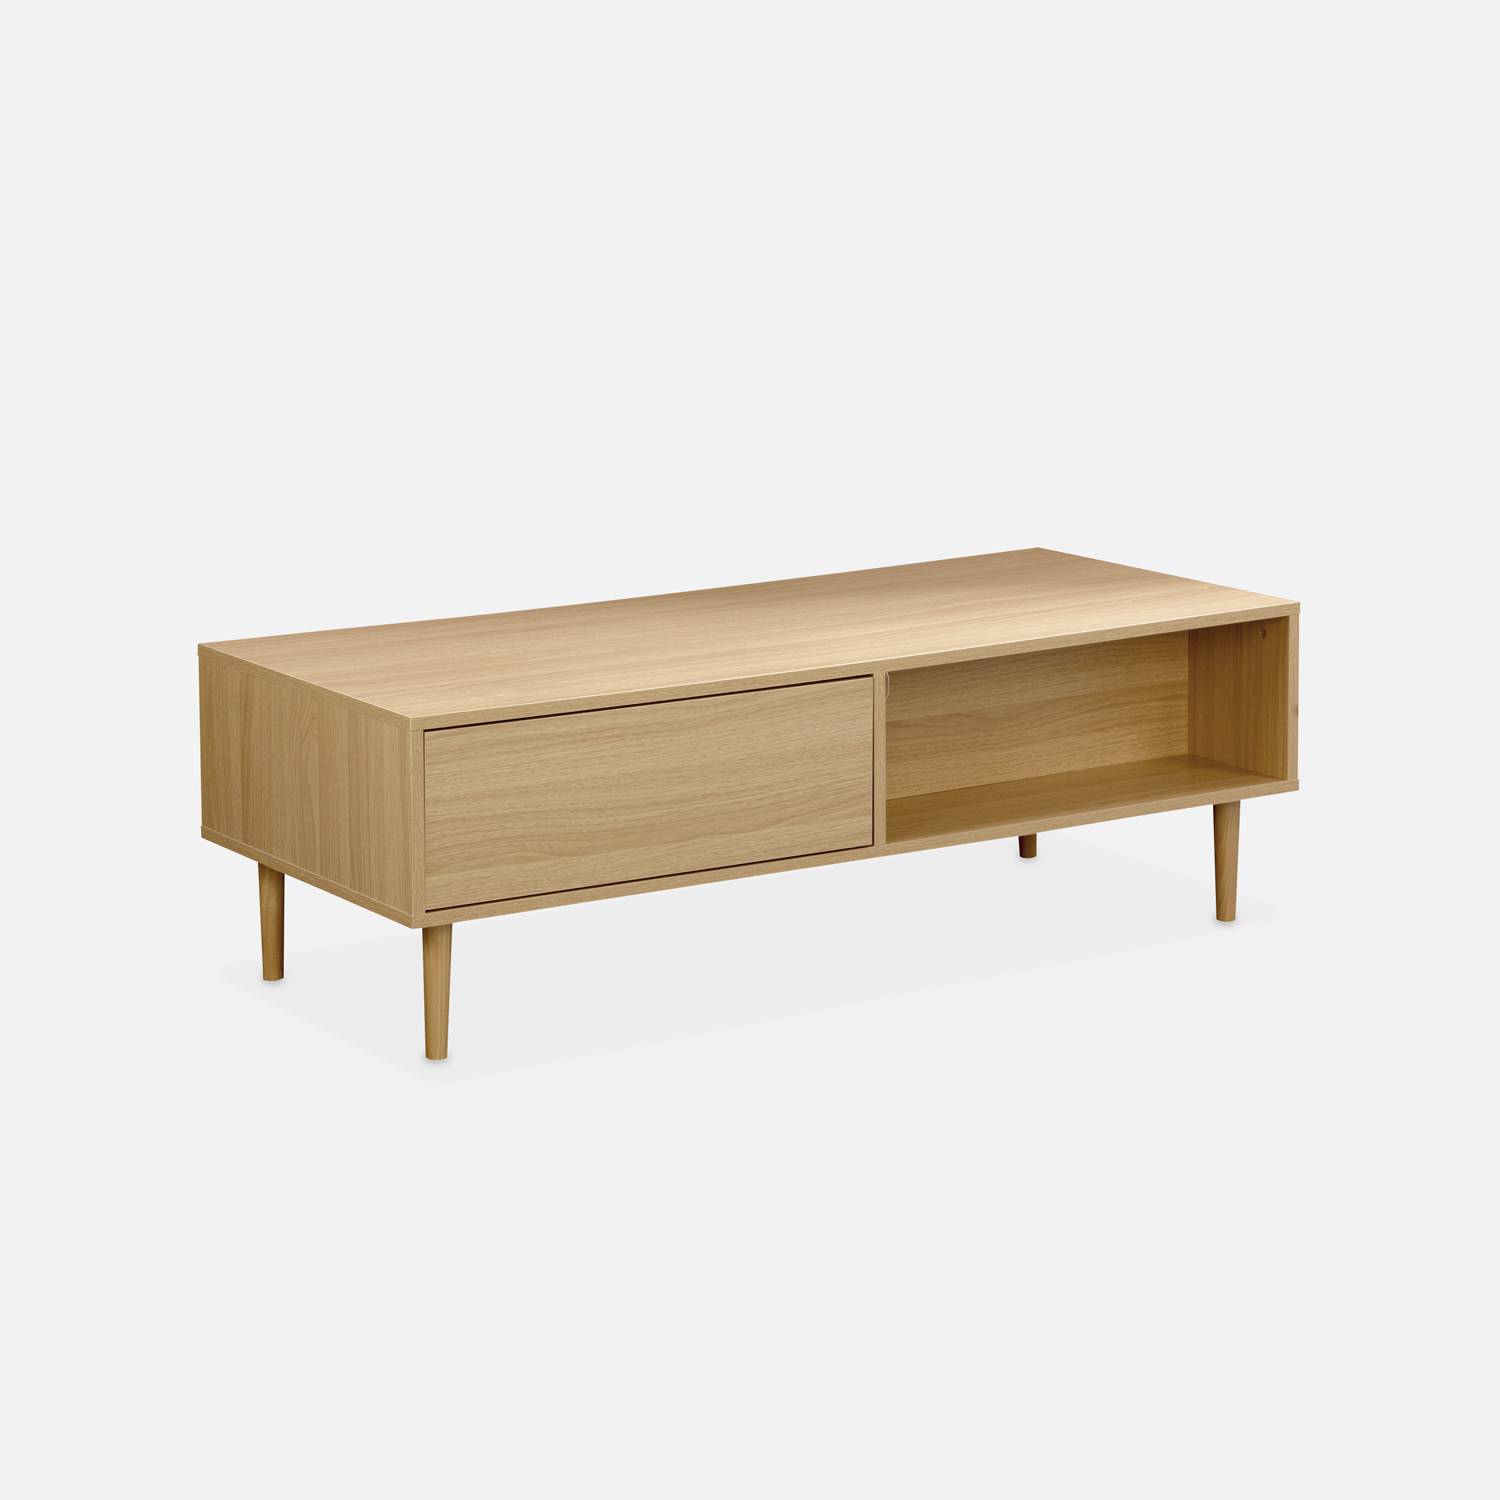 Wood-effect coffee table, 120x55x40cm, Mika, Natural wood colour,sweeek,Photo3